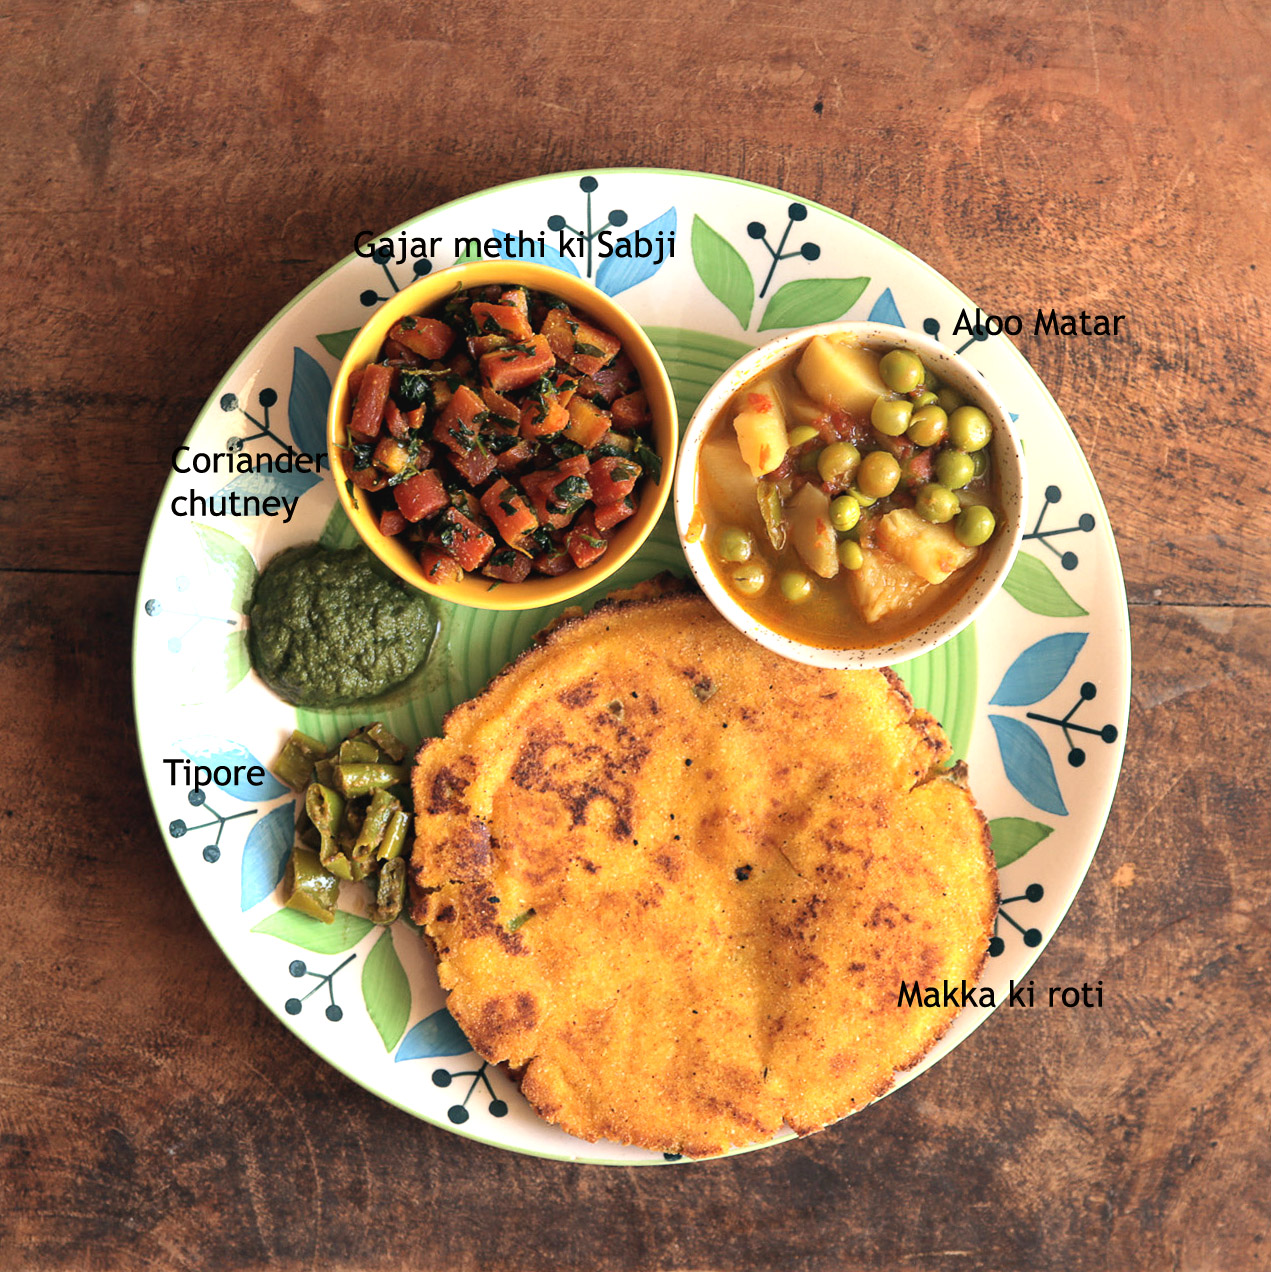 15 vegetarian Indian lunch ideas part 2 - #indian #lunchideas #vegetarian #thali